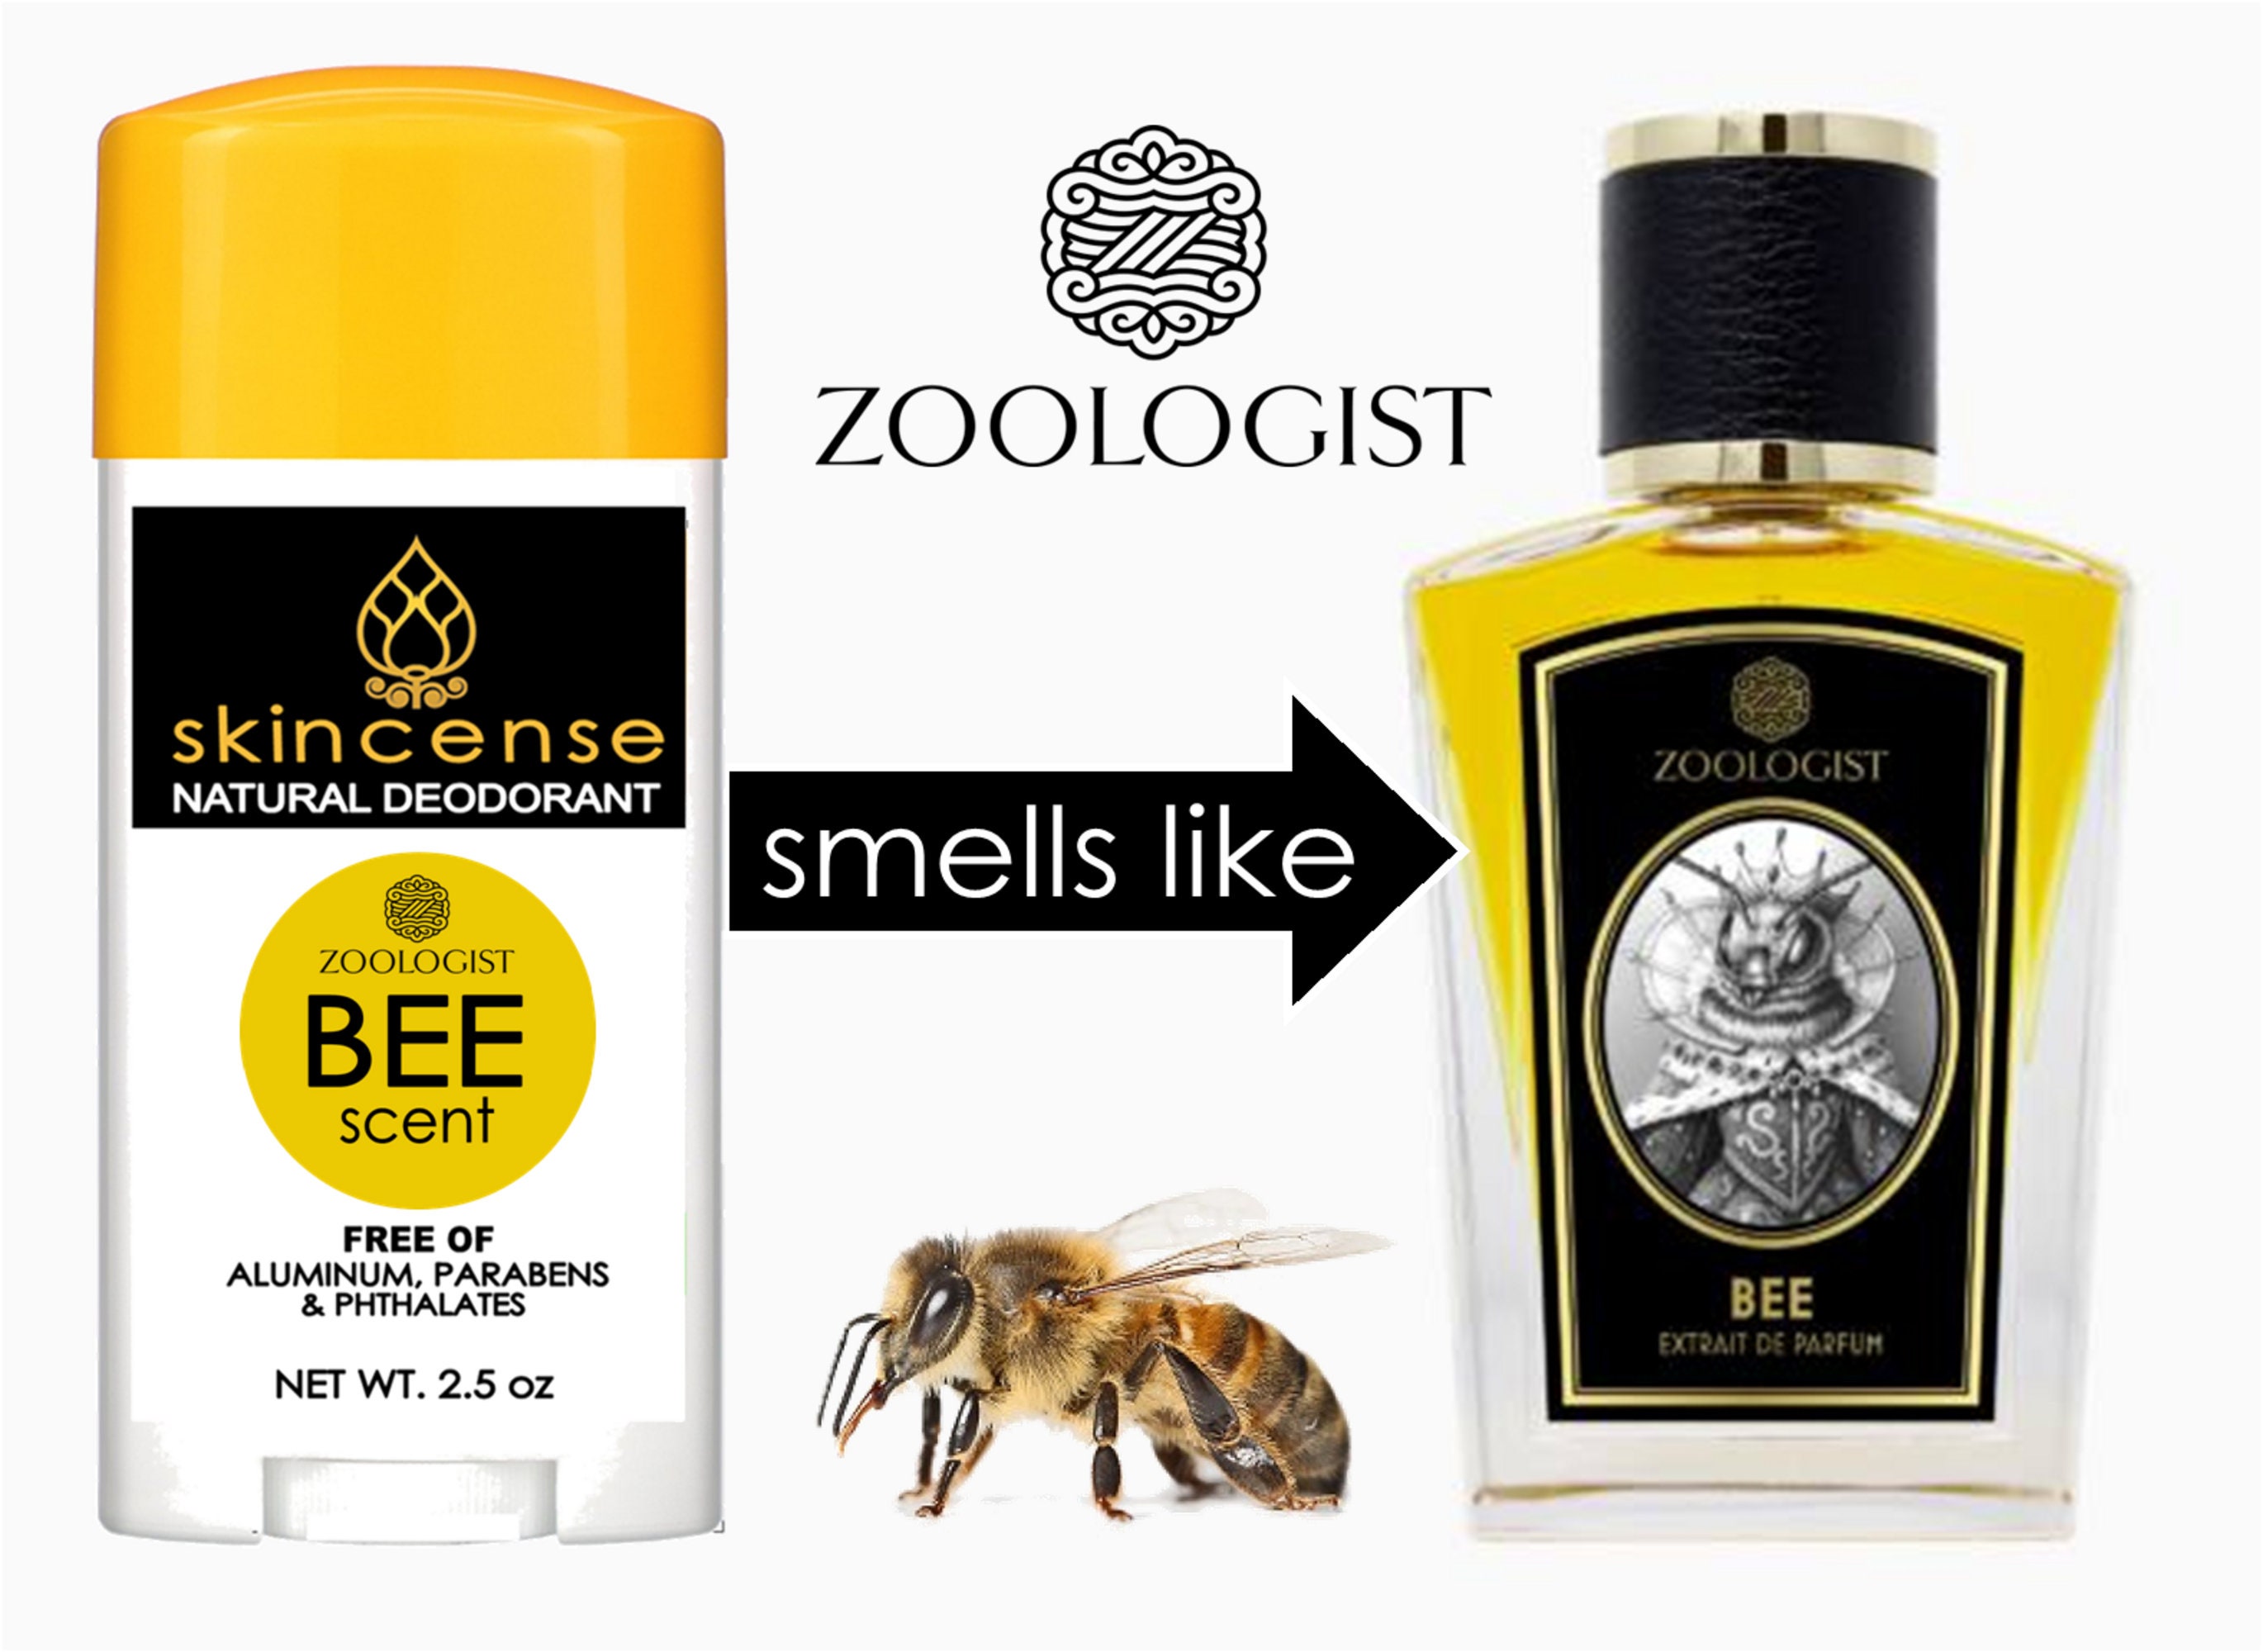 Zoologist perfumes